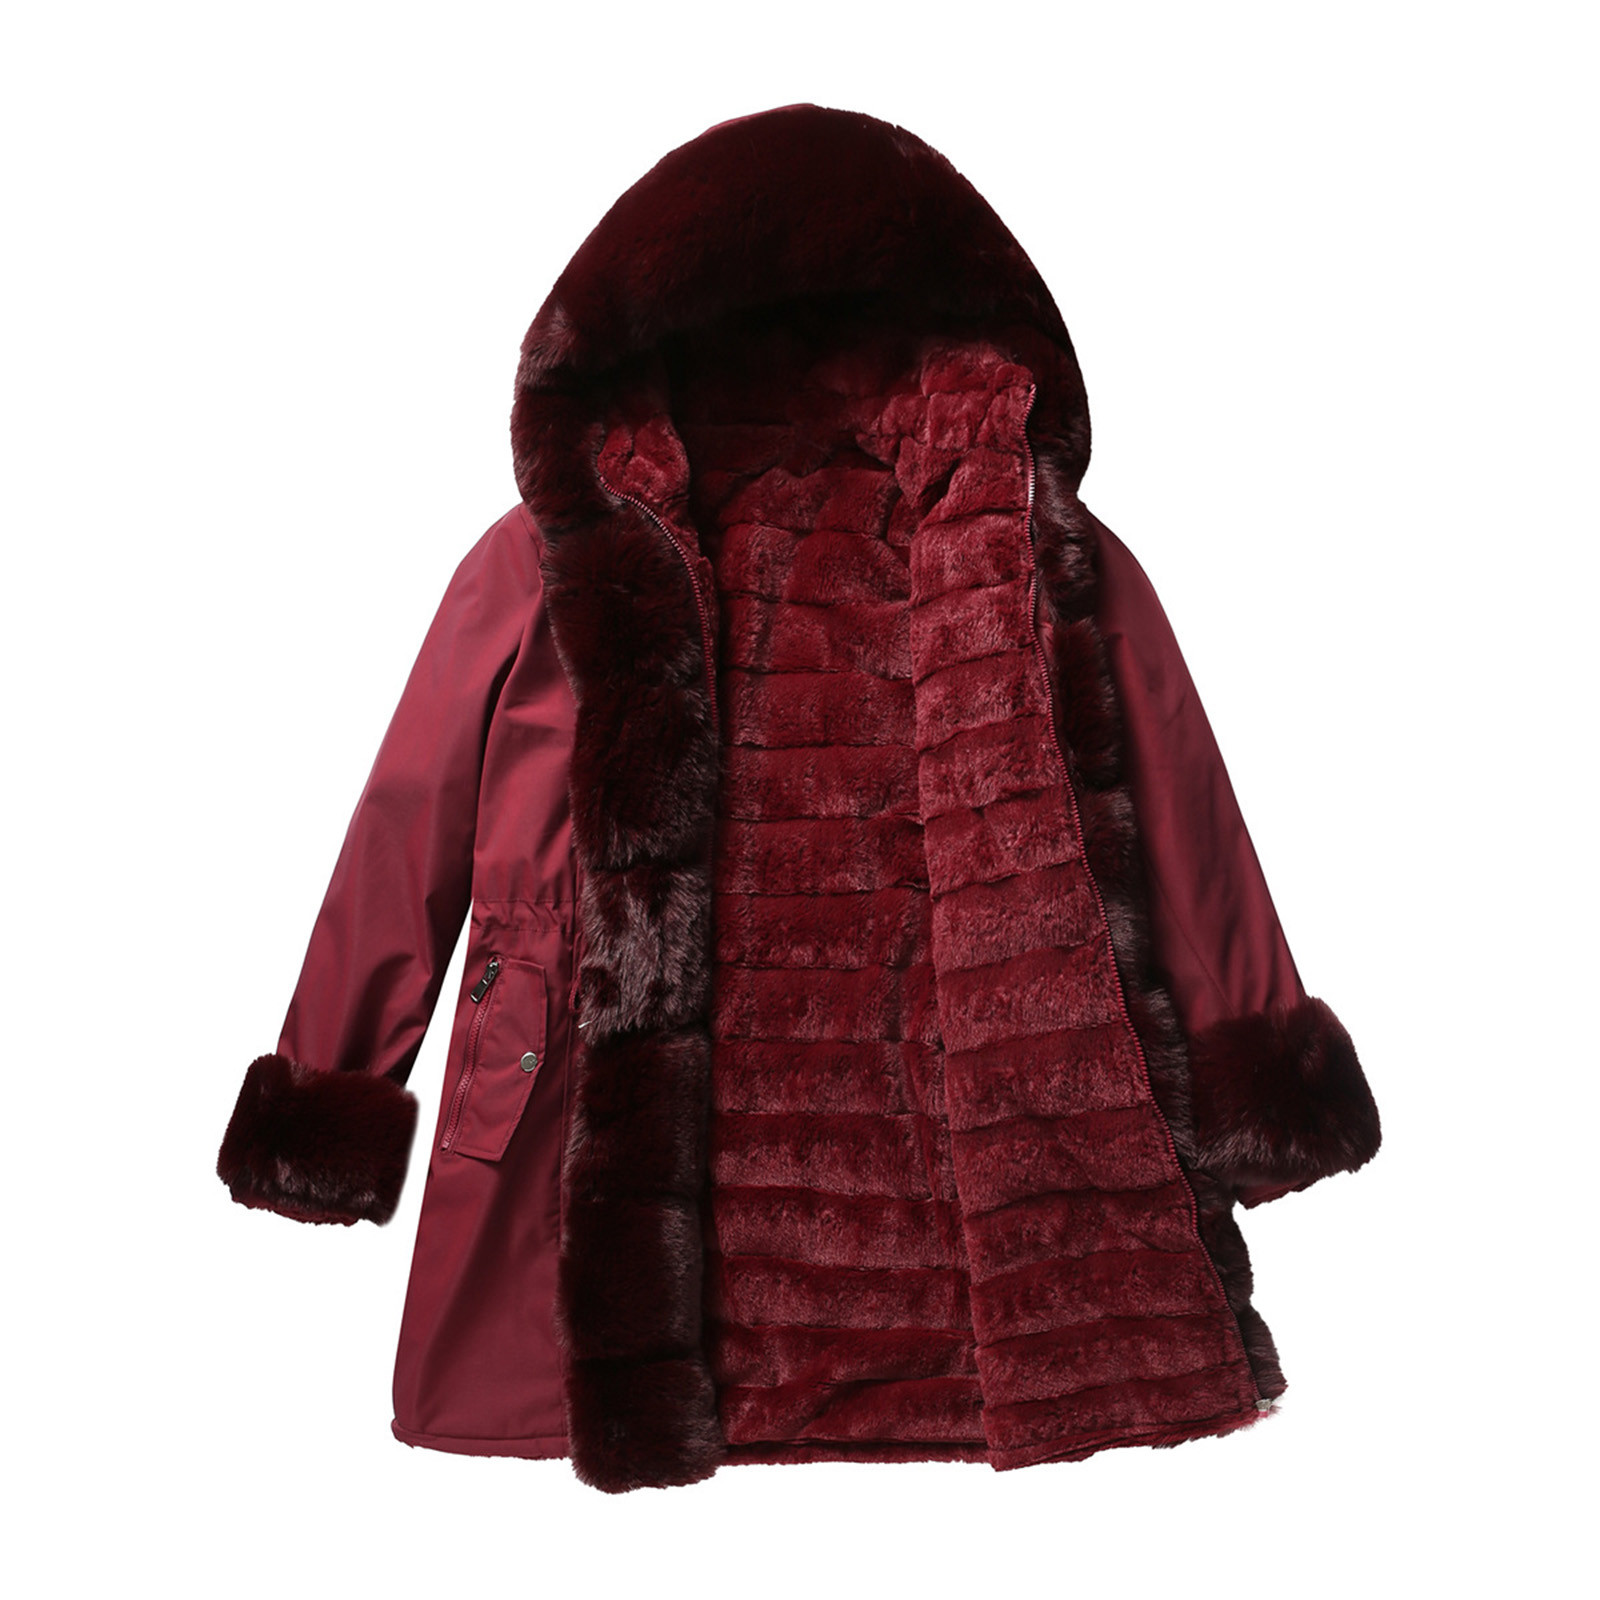 YFPWM Jacket for Women Winter Wrap Cape Coat Fleece Open Front Coat With Pockets Double Sided Winter Coat Light Jacket Casual Slim Fit Jacket Short Blouse - image 2 of 6